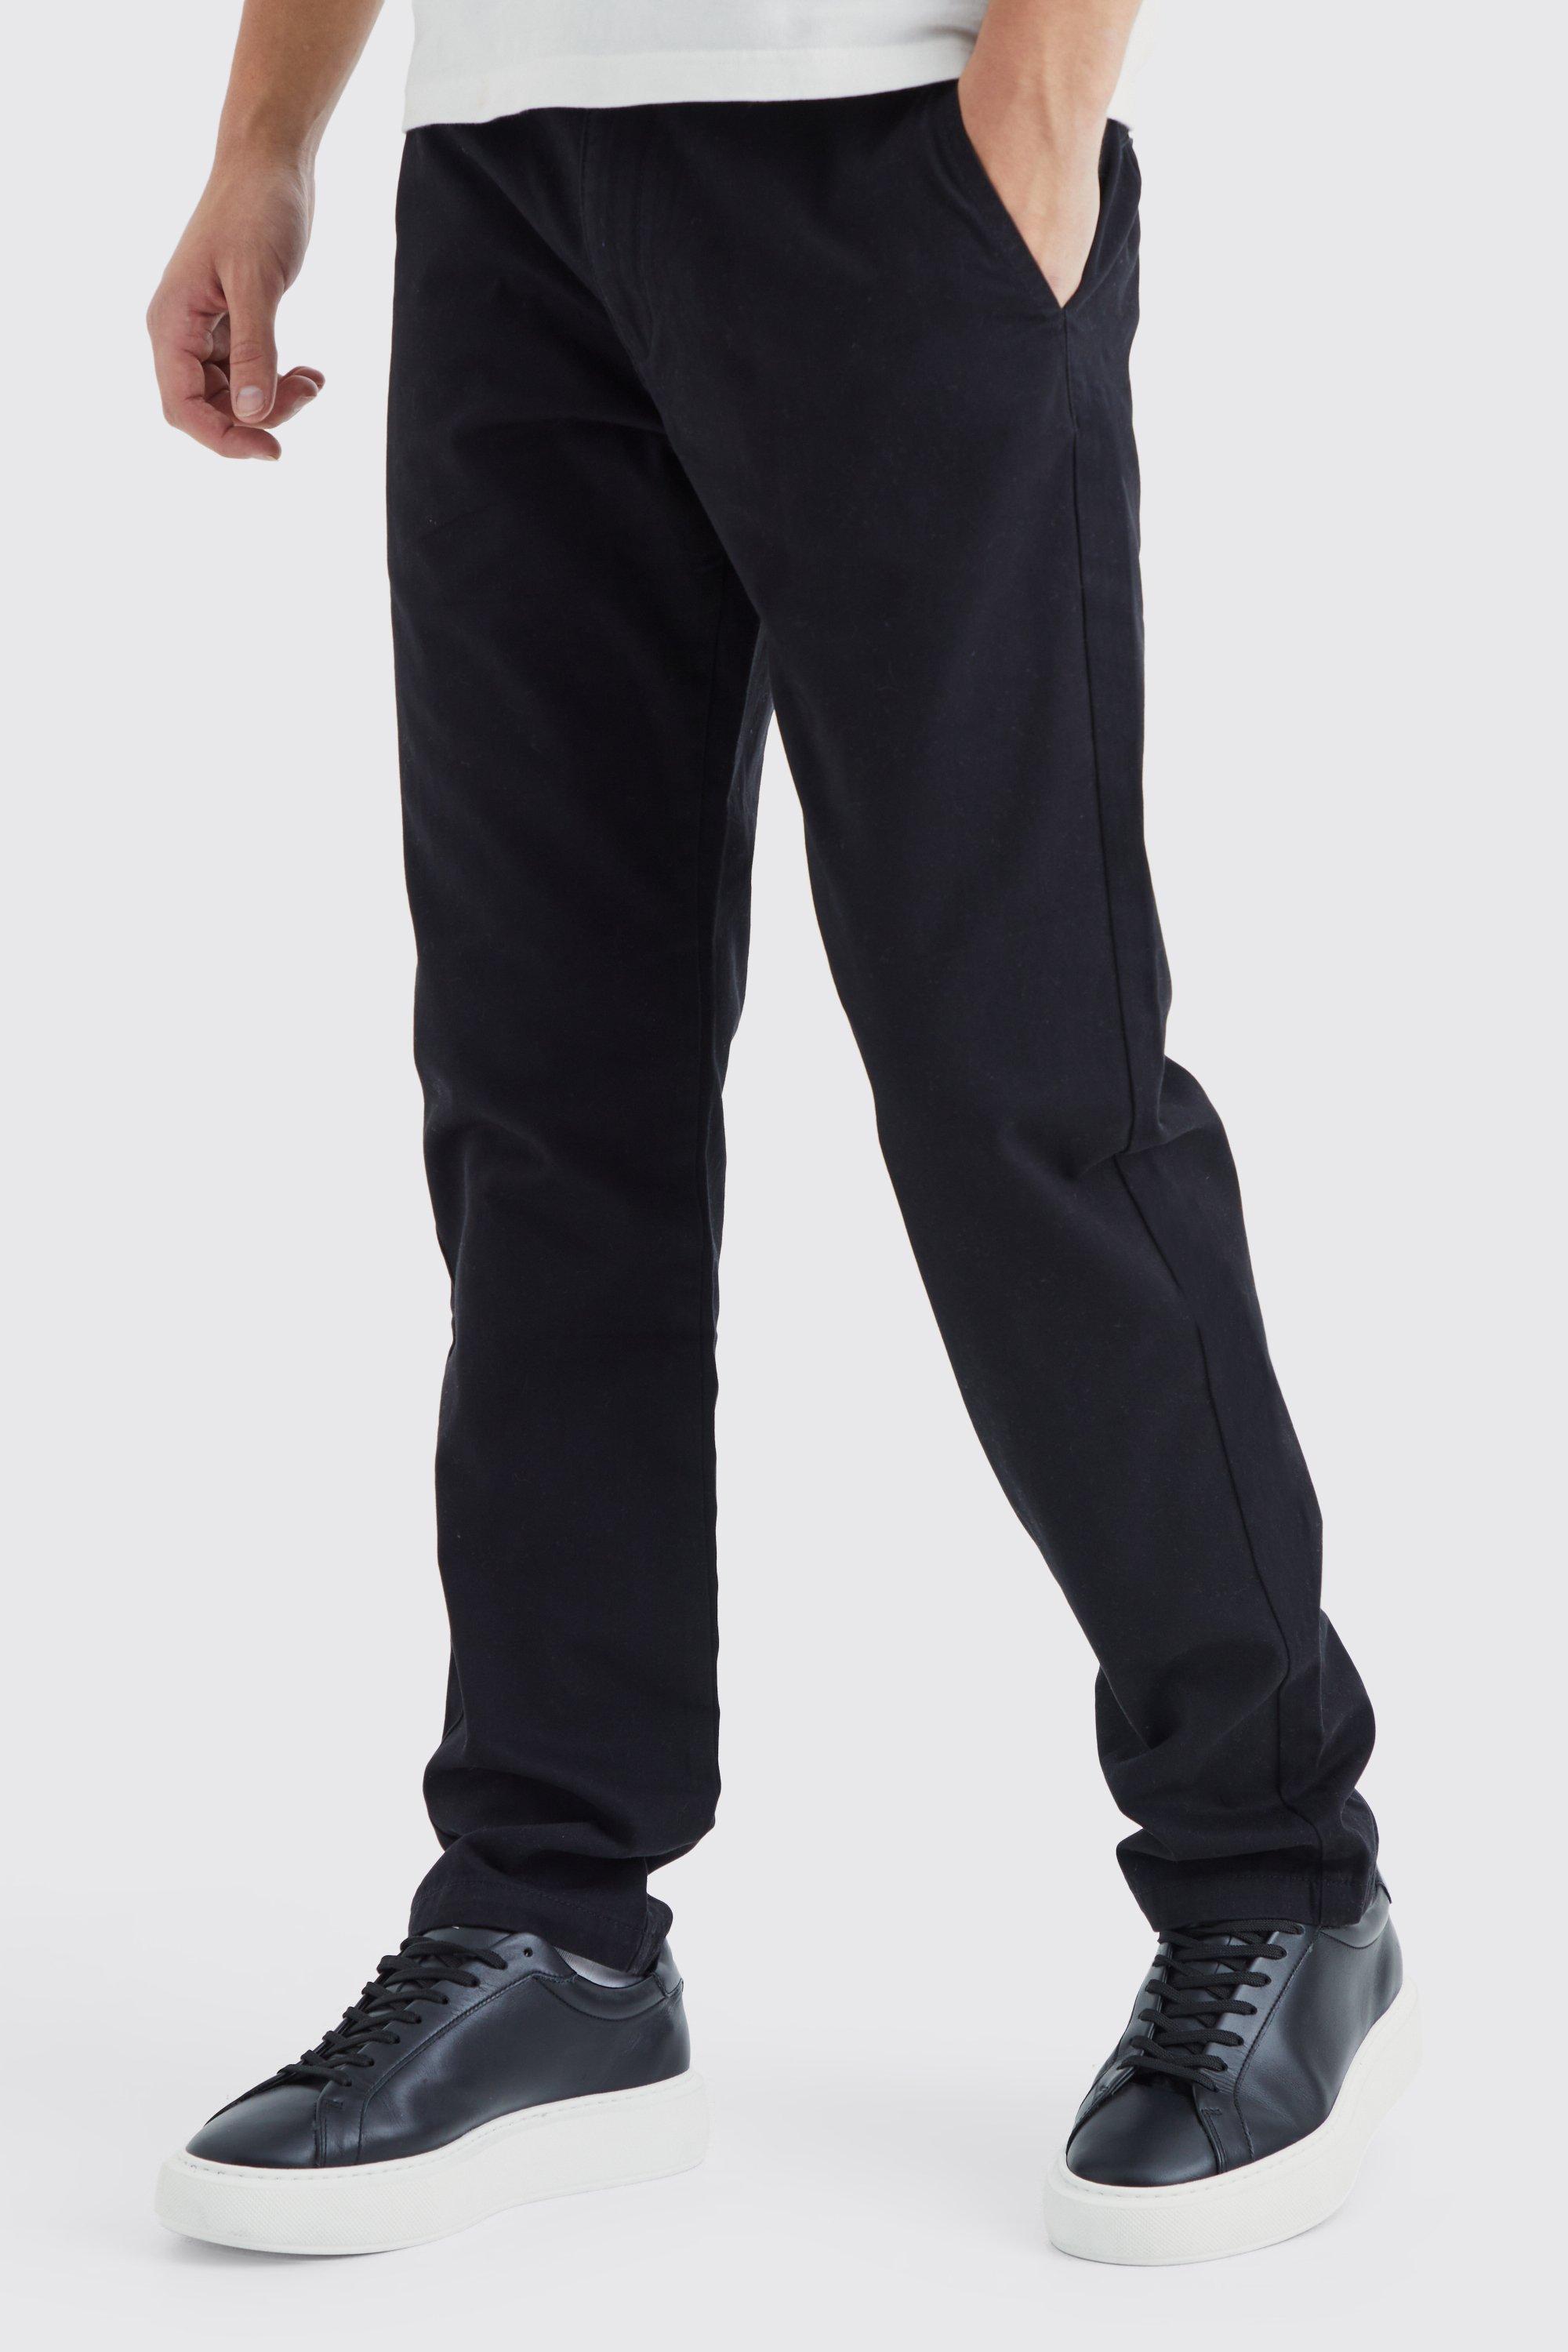 pantalon chino slim homme - noir - 32, noir